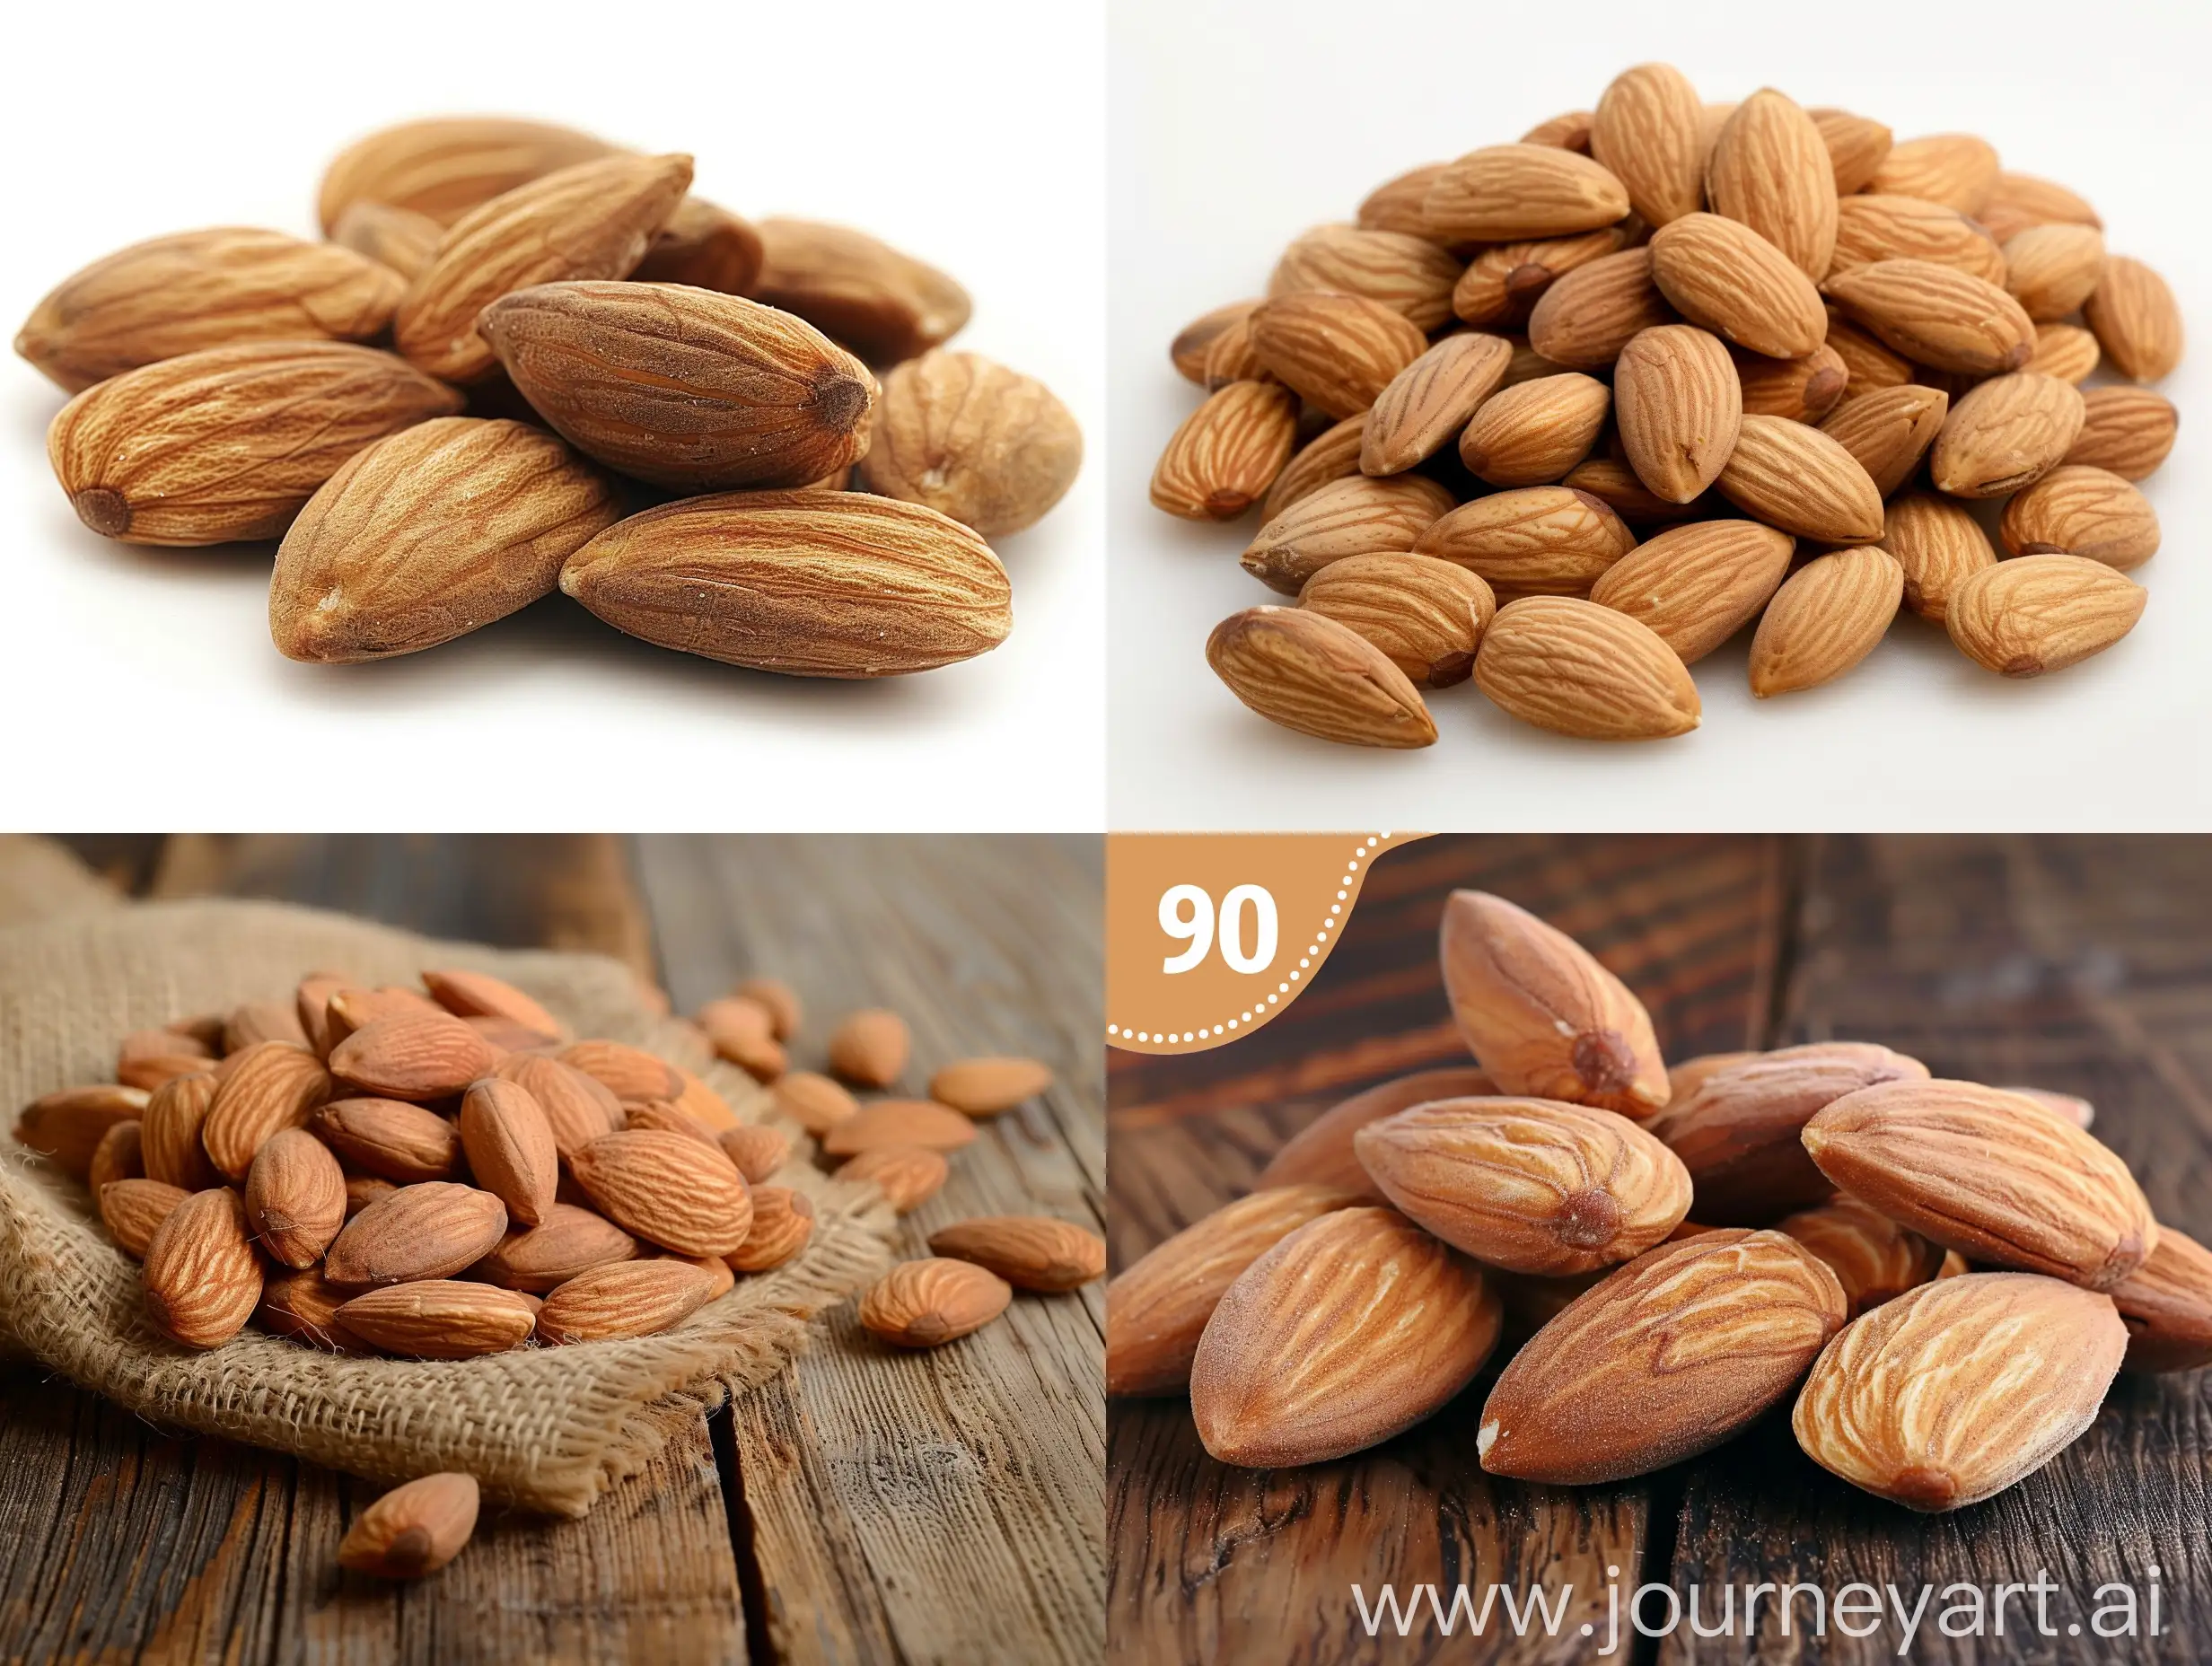 Special studio photo of almonds